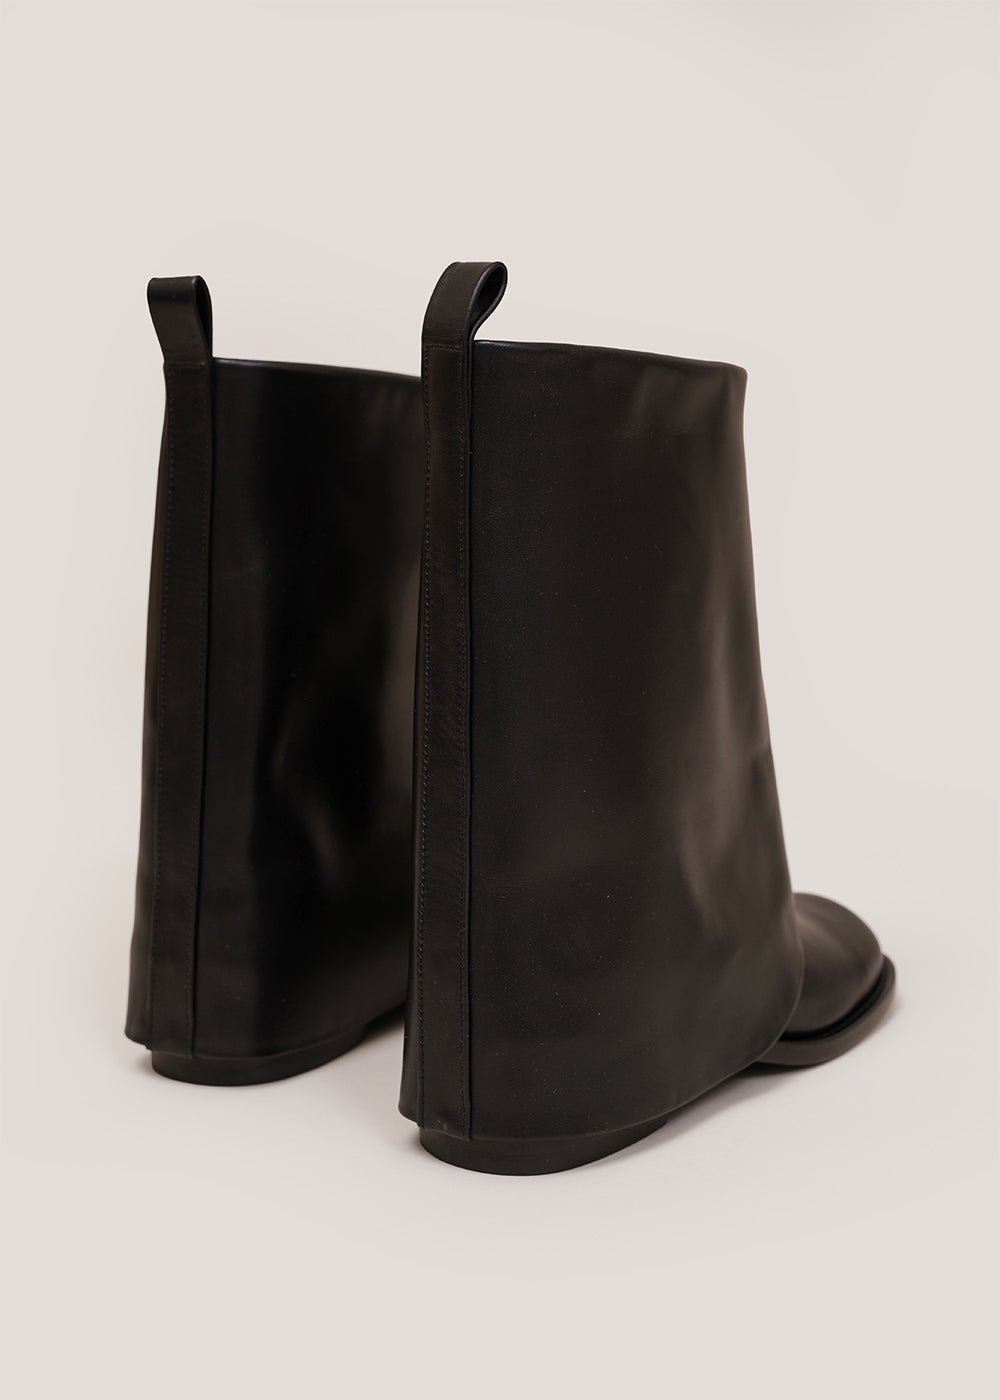 AMOMENTO Black Folded Boots - New Classics Studios Sustainable Ethical Fashion Canada